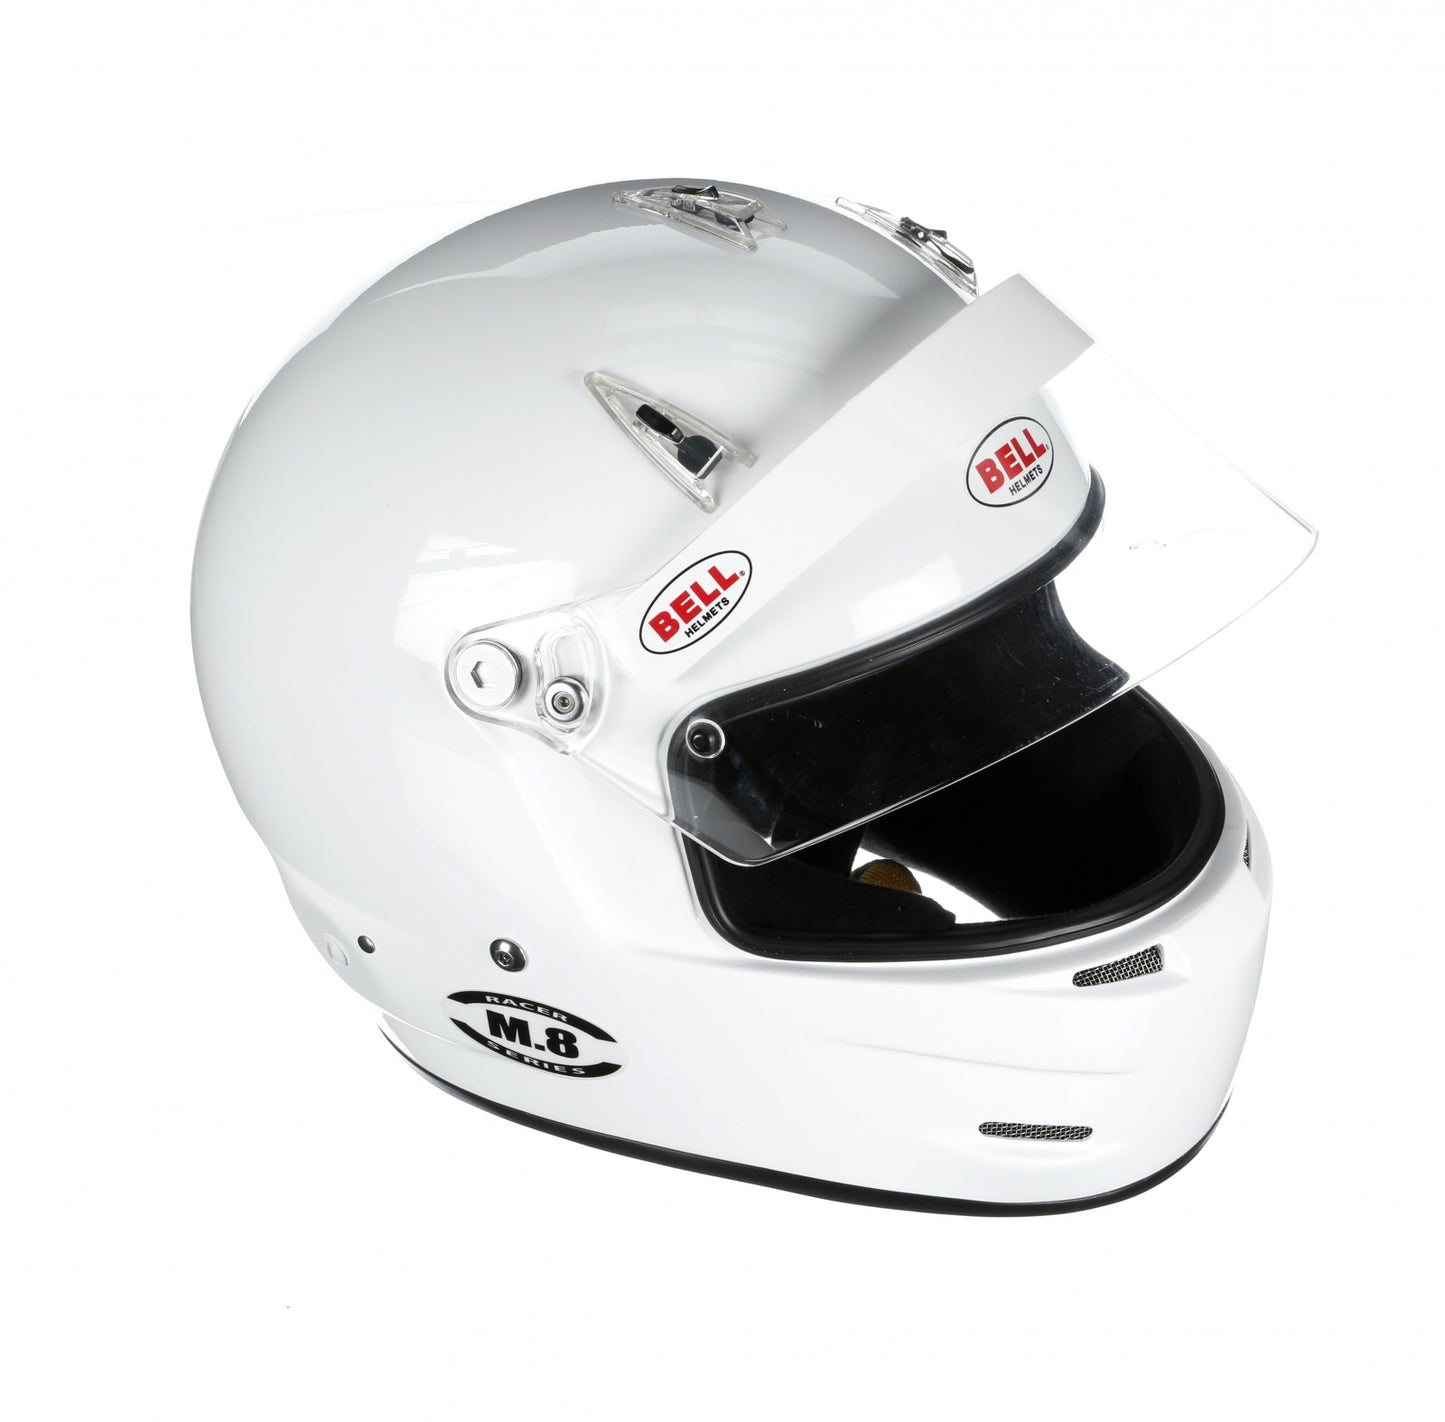 Bell M8 Racing Helmet-White Size Medium